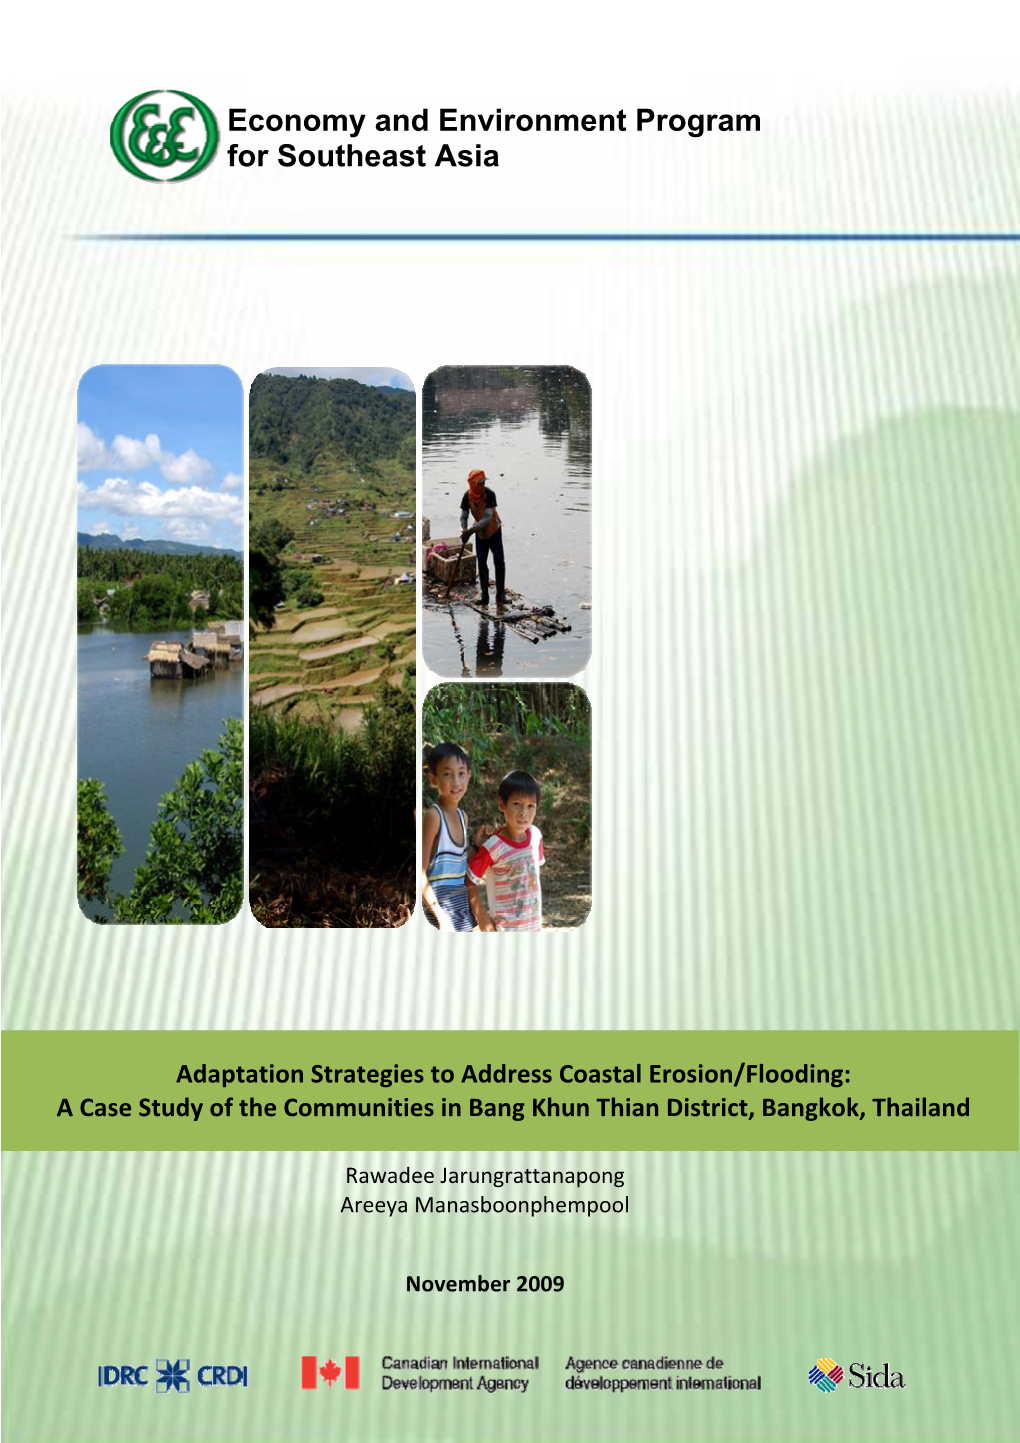 Adaptation Strategies to Address Coastal Erosion/Flooding: a Case Study of the Communities in Bang Khun Thian District, Bangkok, Thailand